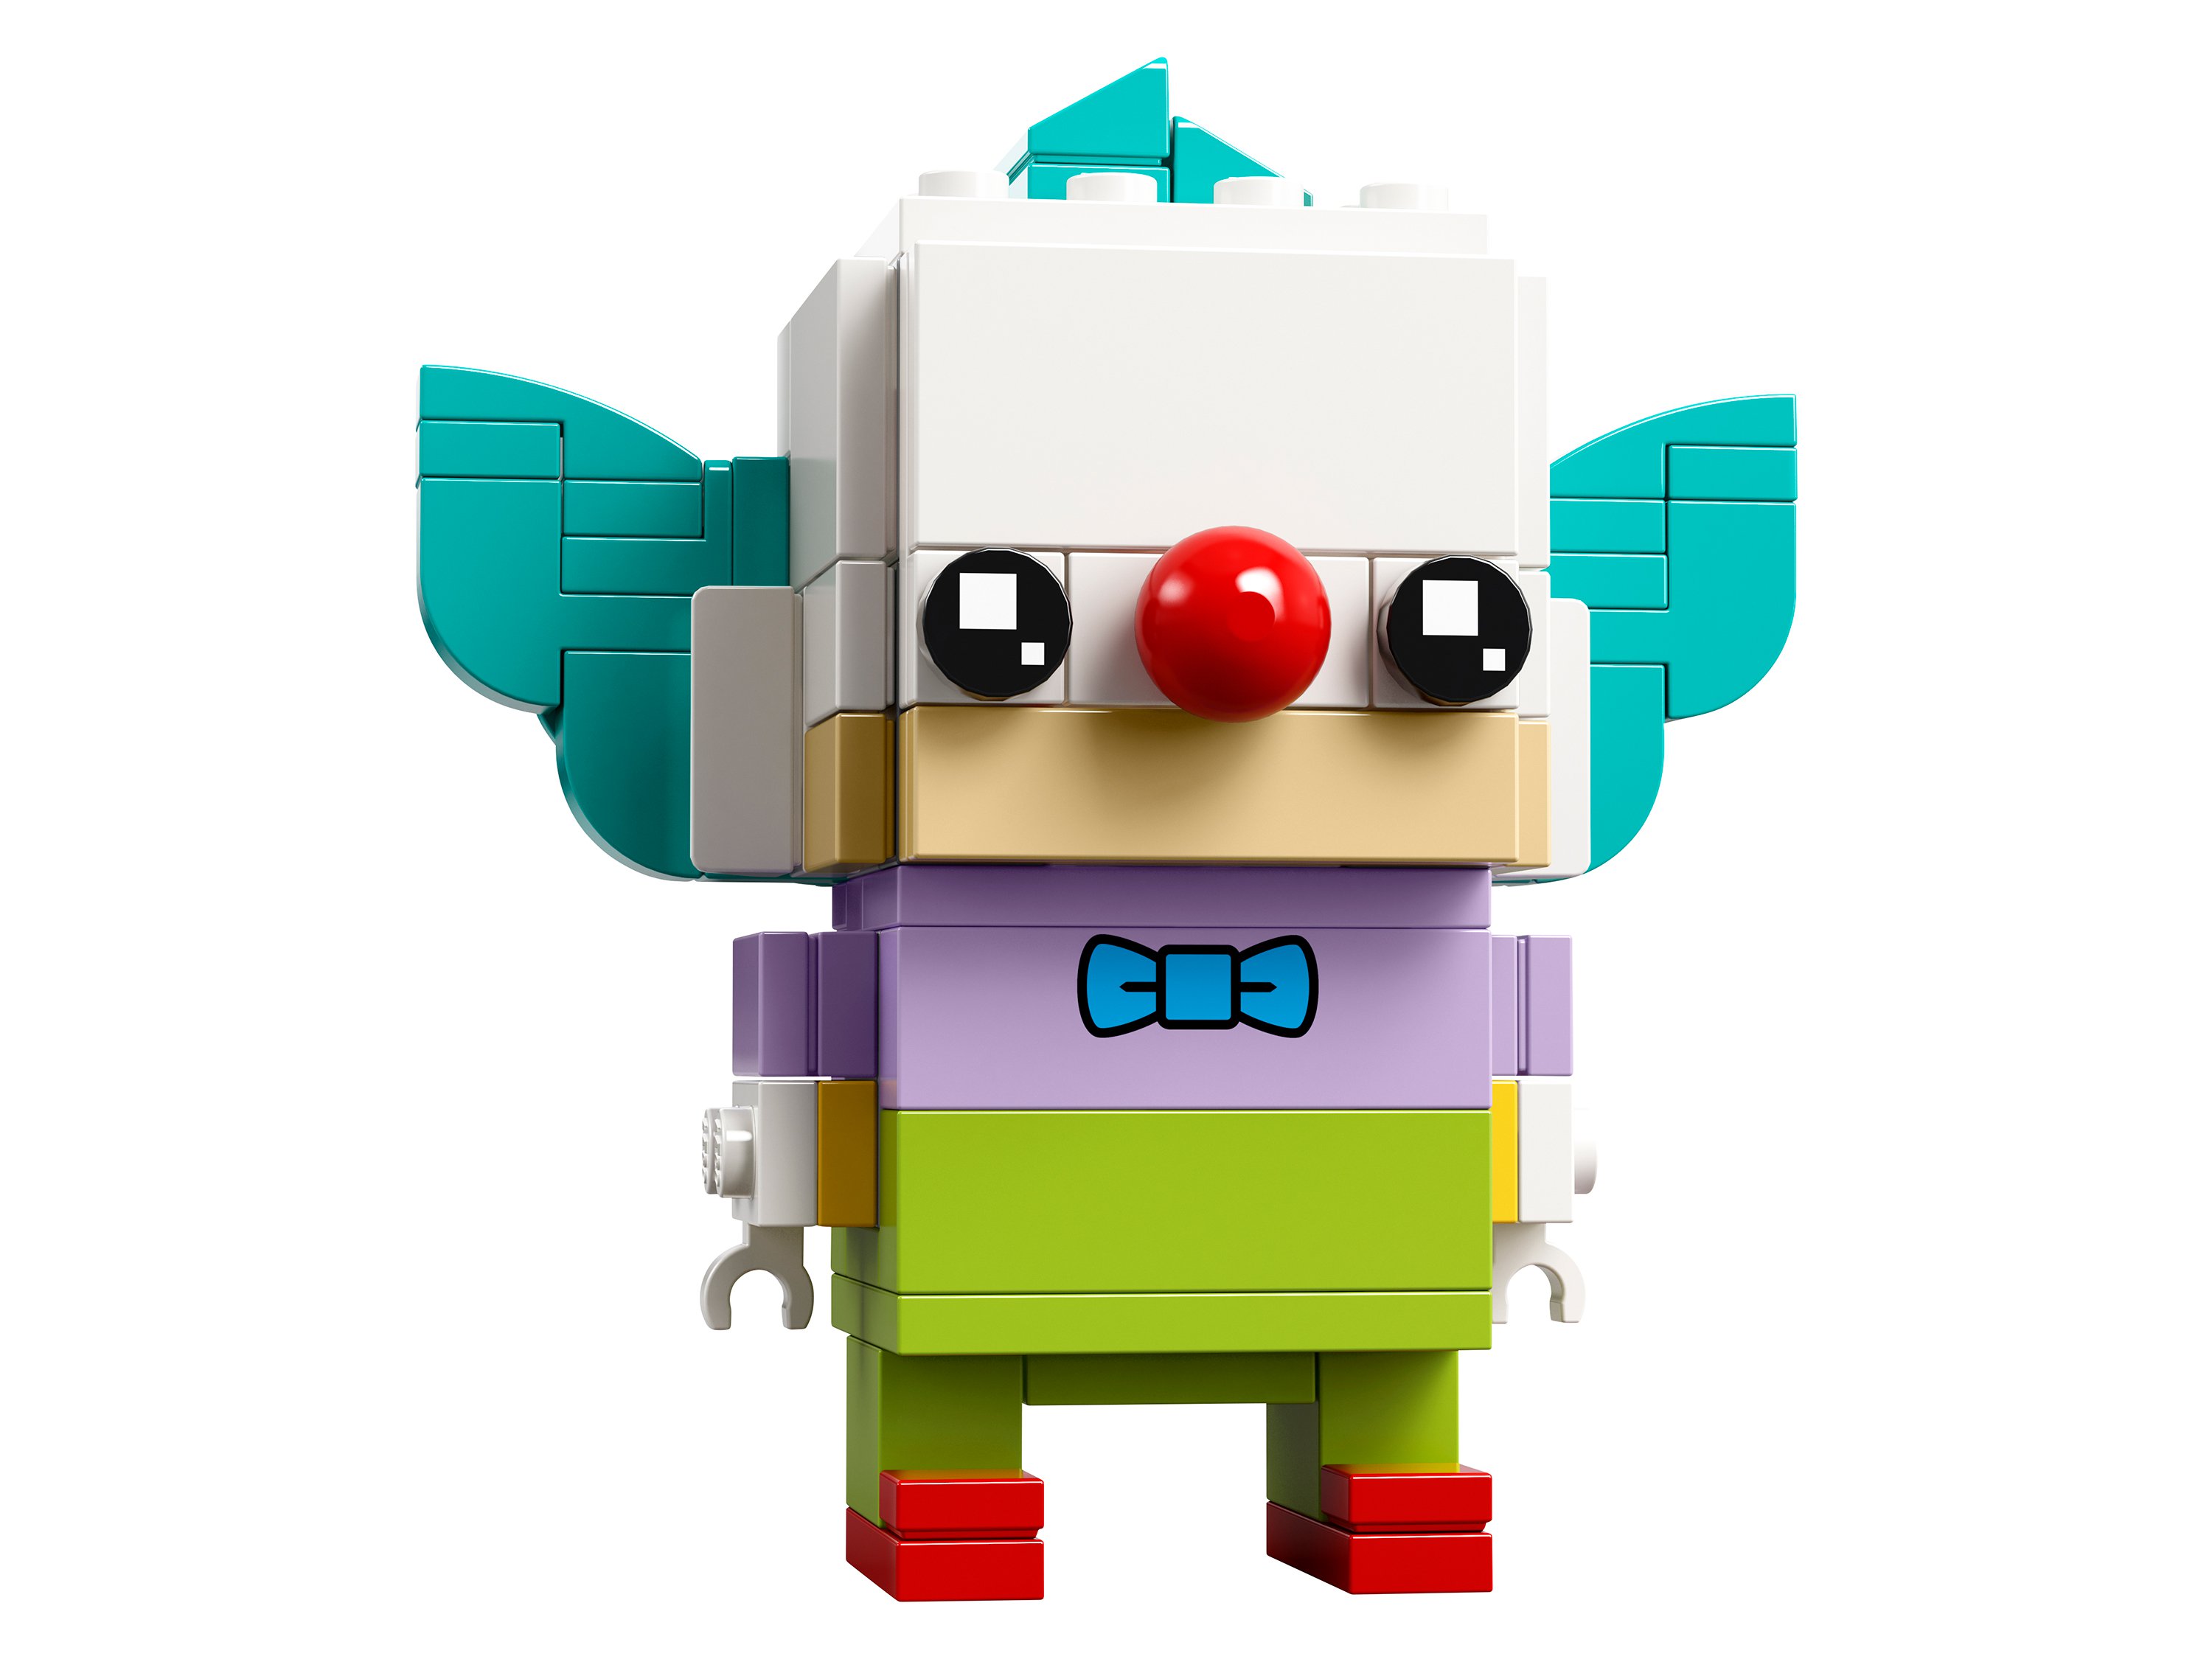 Lego BrickHeadz 41632 Гомер Симпсон и клоун Красти